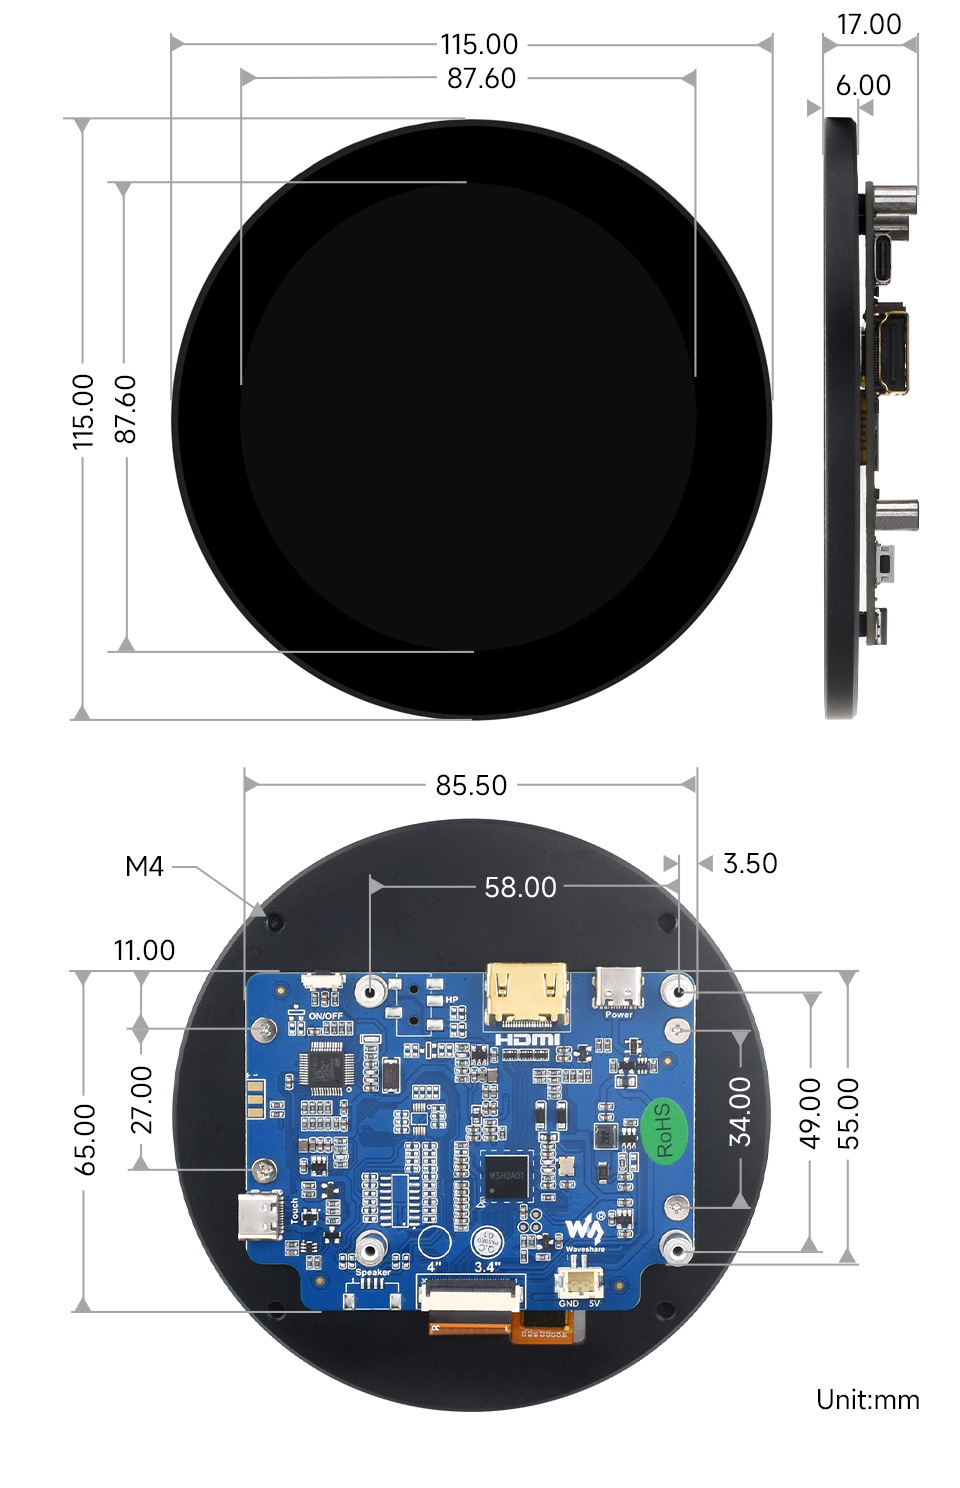 3.4inch 800x800 LCD, dimensions